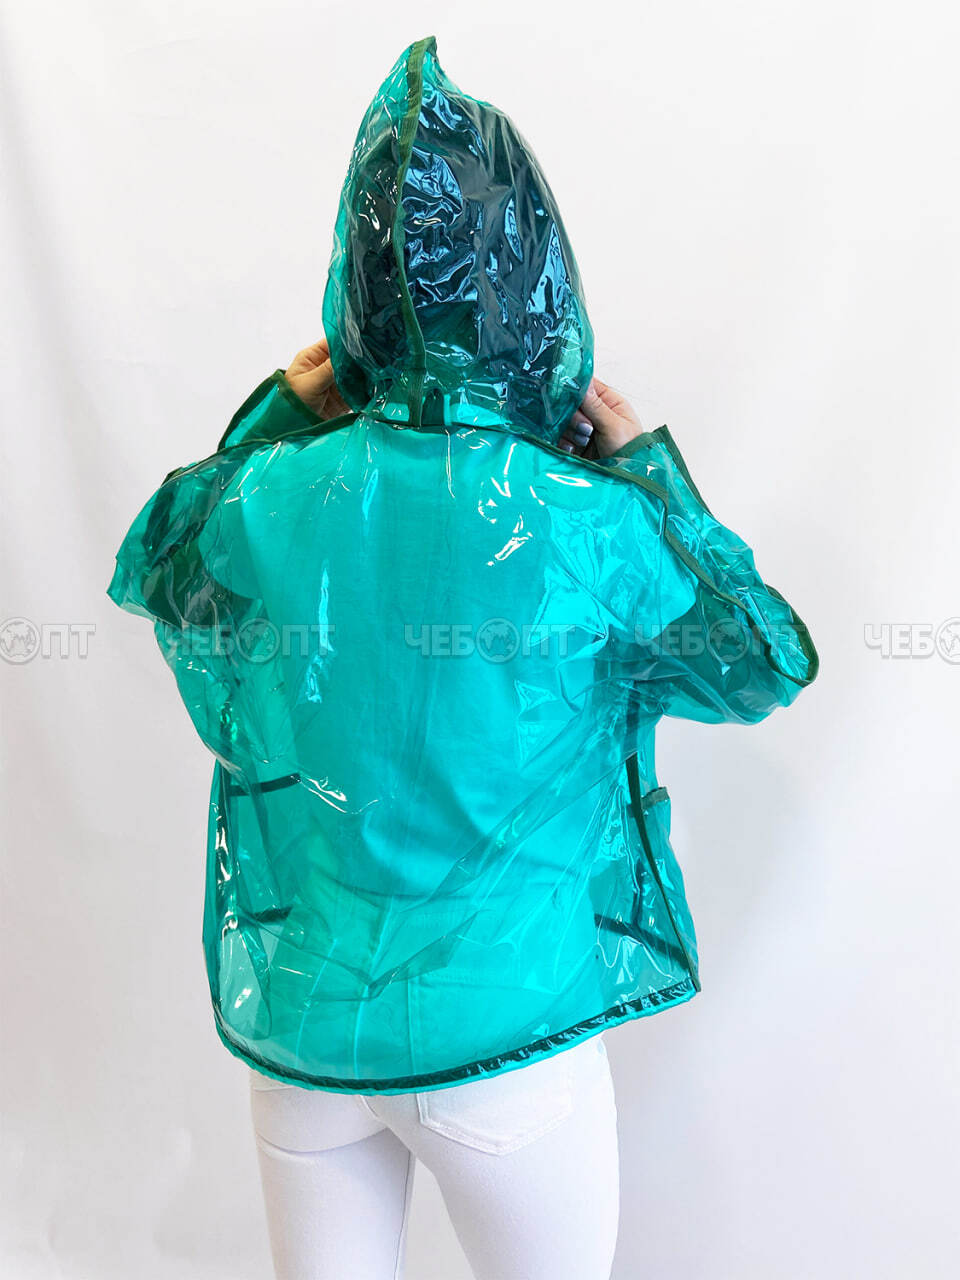 Куртка дождевик на молнии,ЧЕБПРО,цветная пленка, размер 40-44,100% пленка ПВХ, Арт.КурПЛЕНКА/зеленый, МПС [15] СобПр. ЧЕБОПТ.